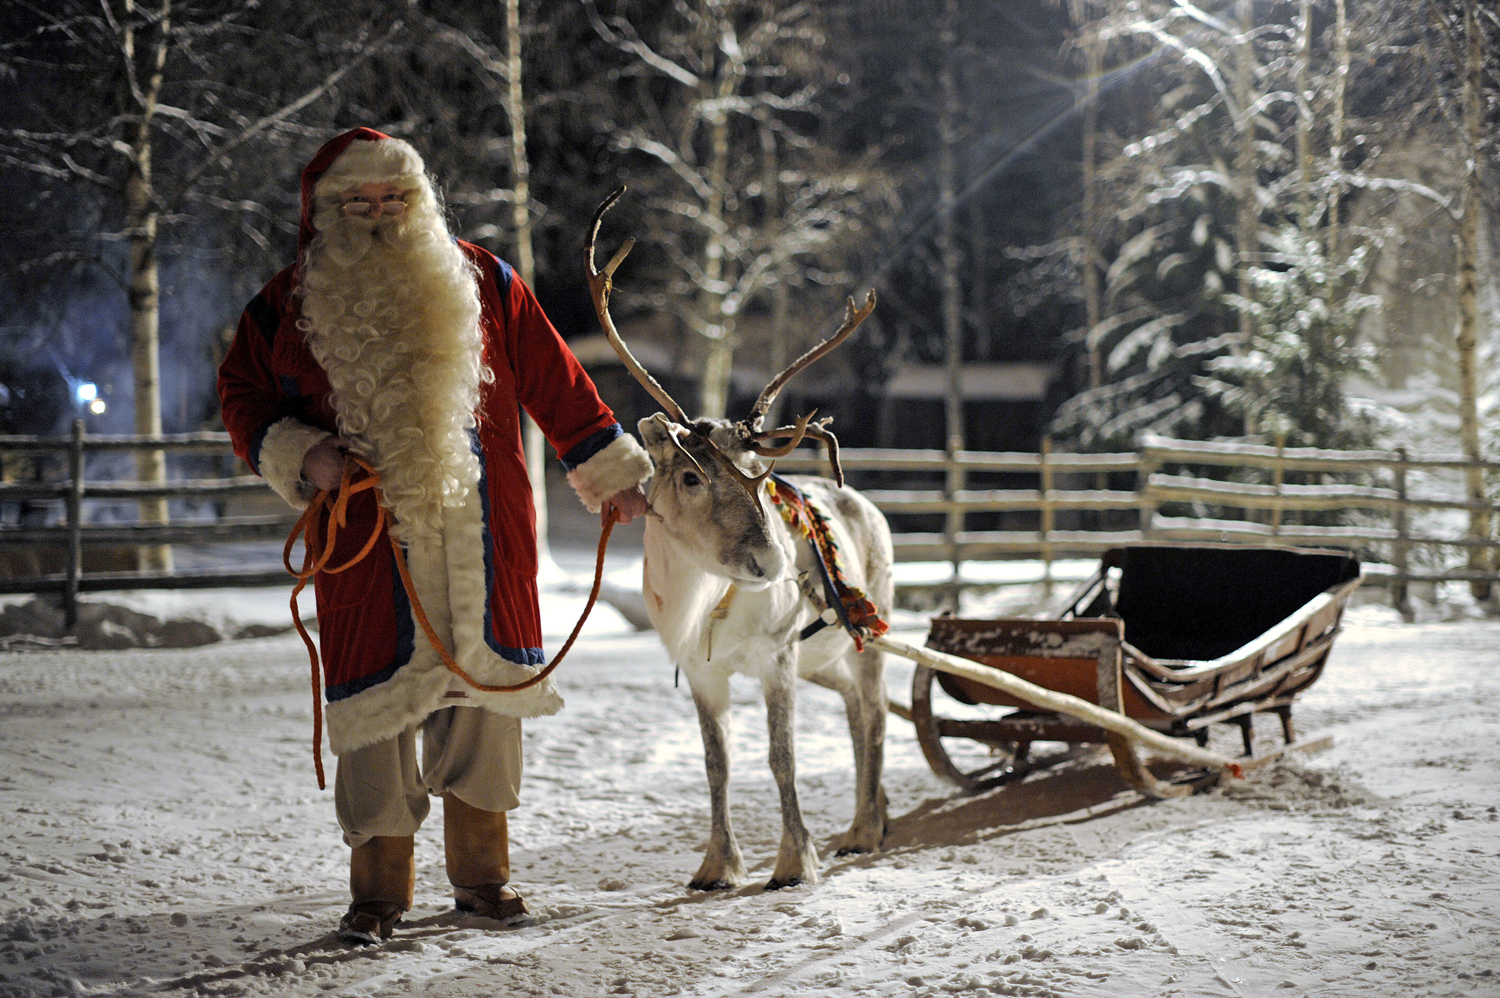 Rudolph WAS lit — and Santa was taking magic mushrooms!